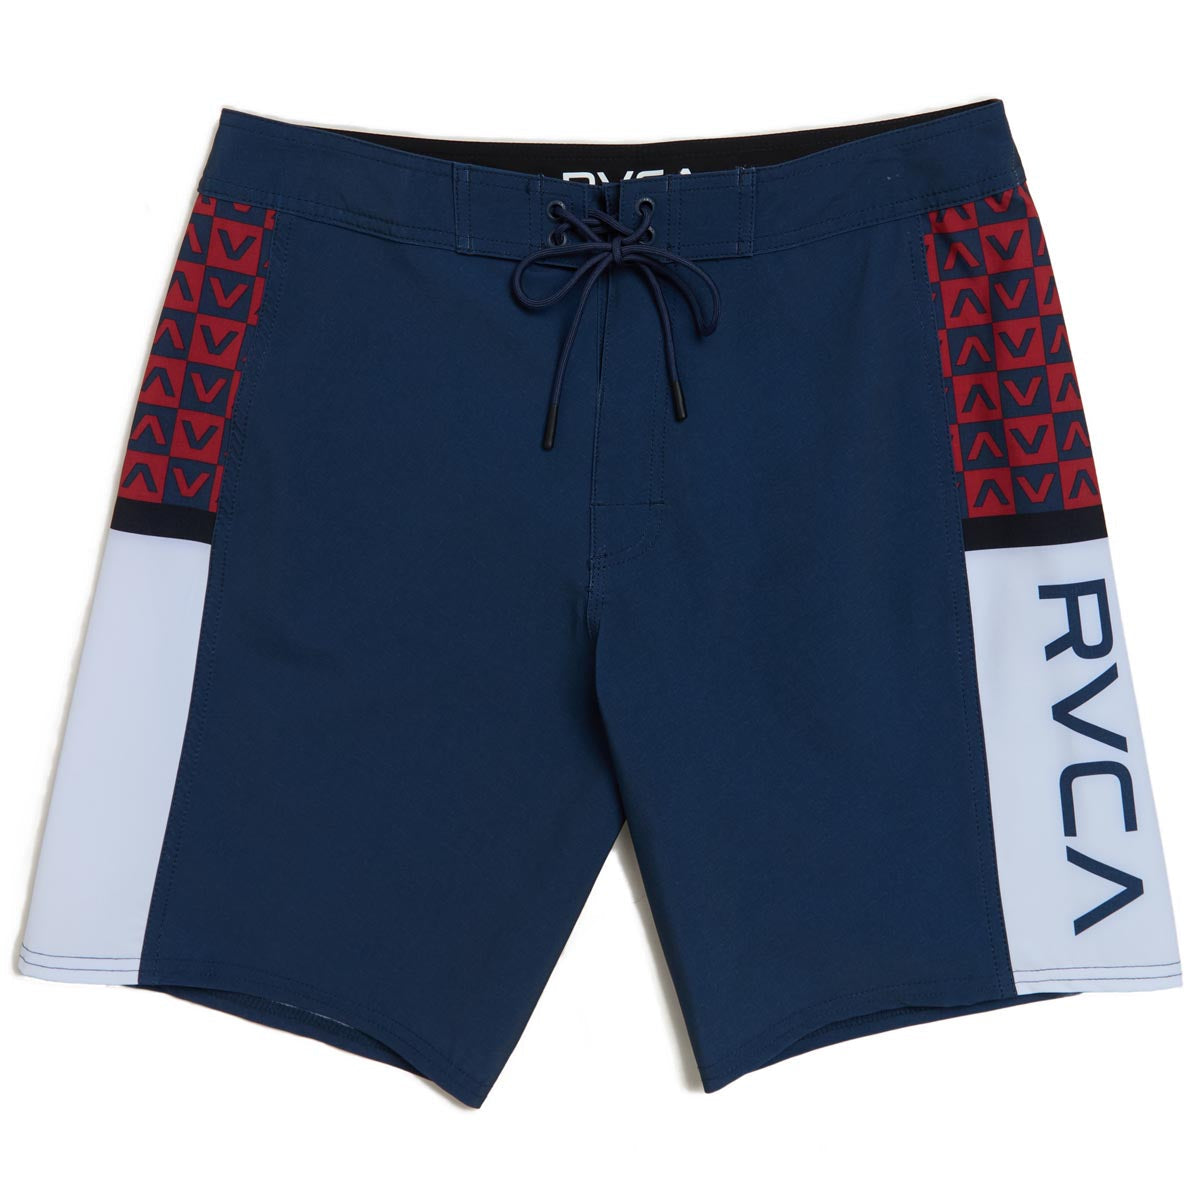 RVCA Apex 2 Board Shorts - Moody Blue image 1